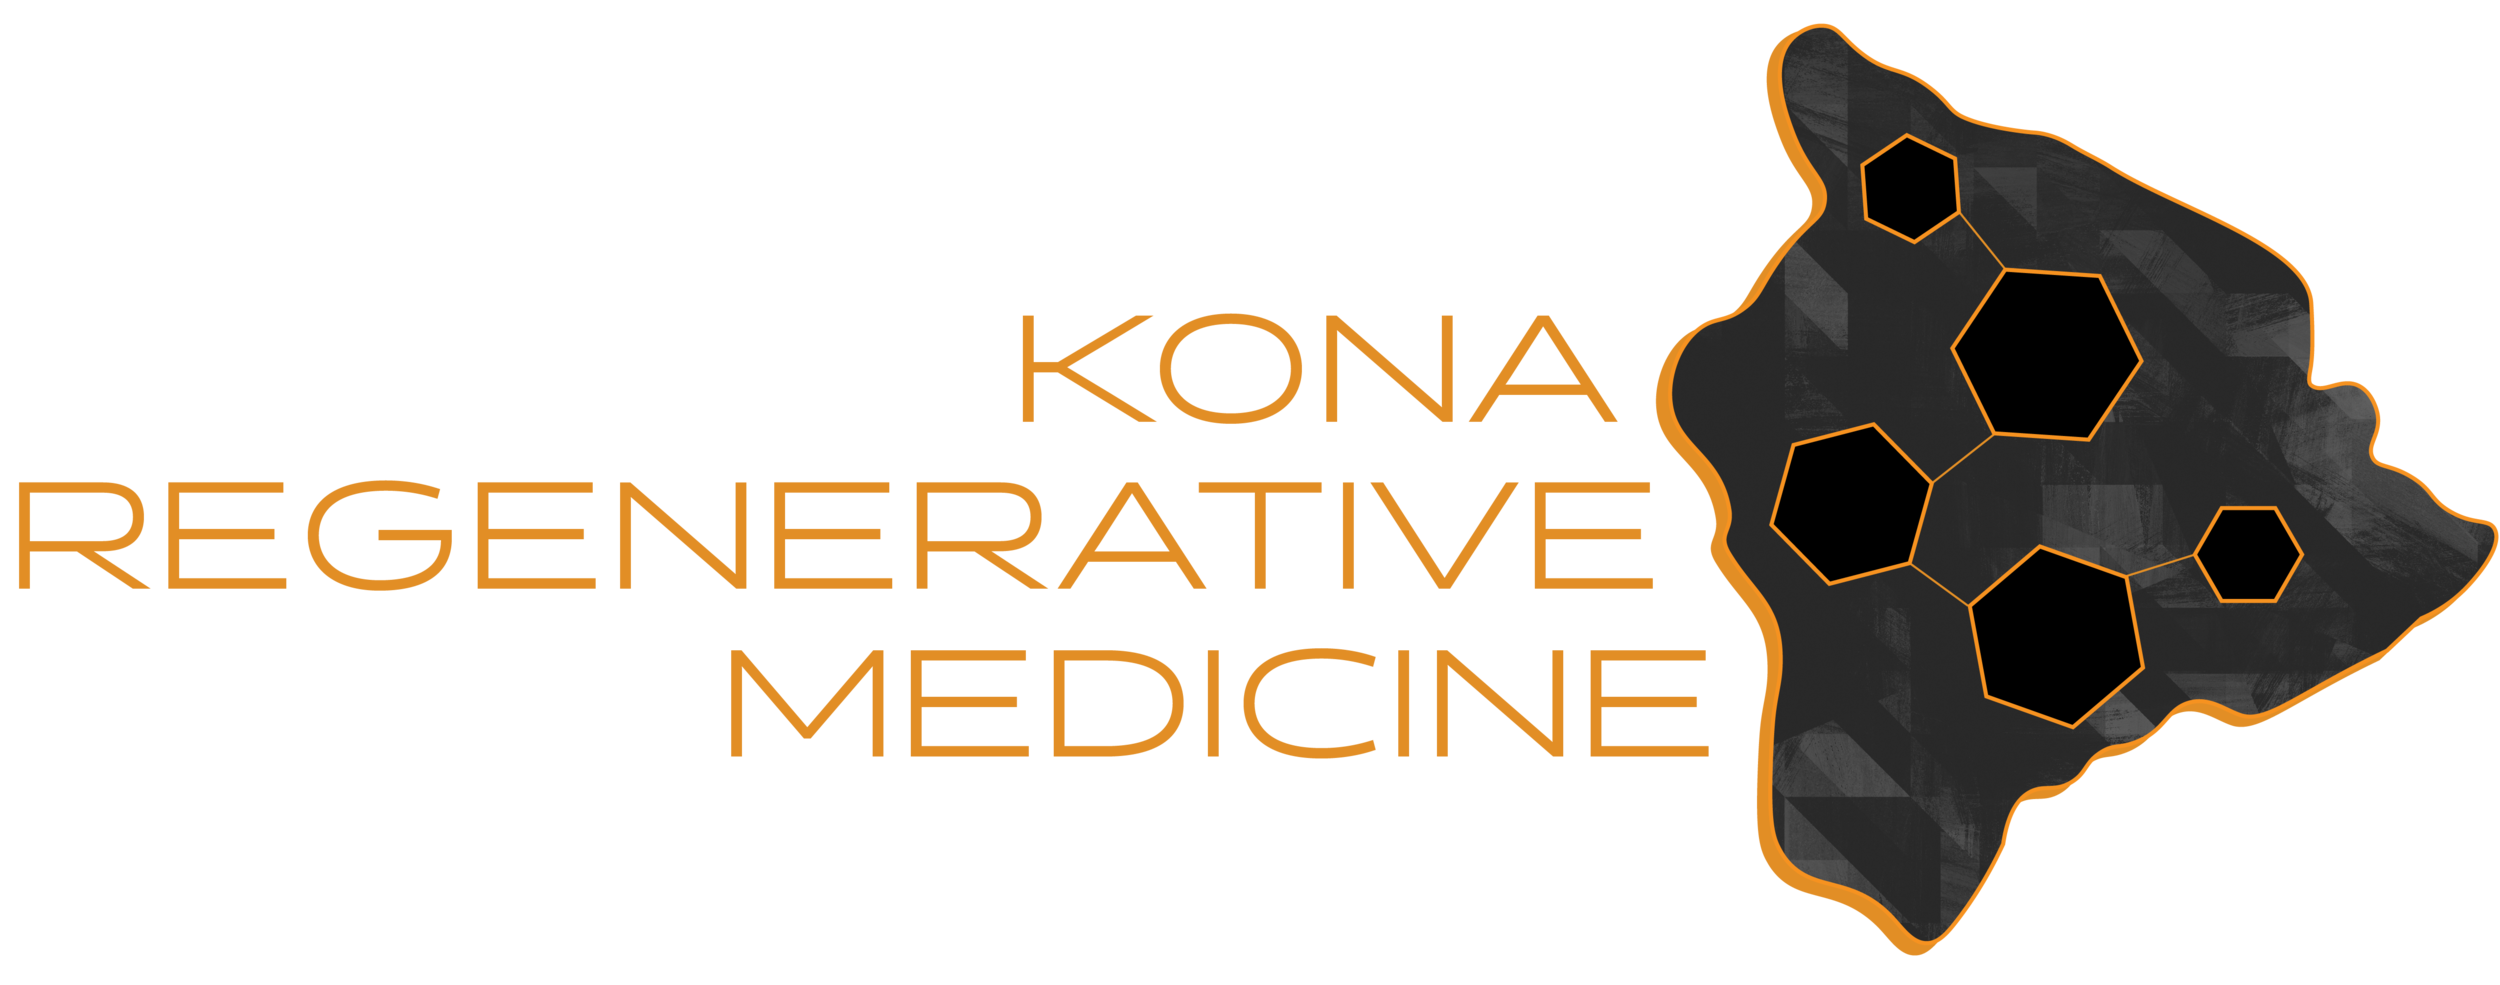 Kona Regenerative Medicine